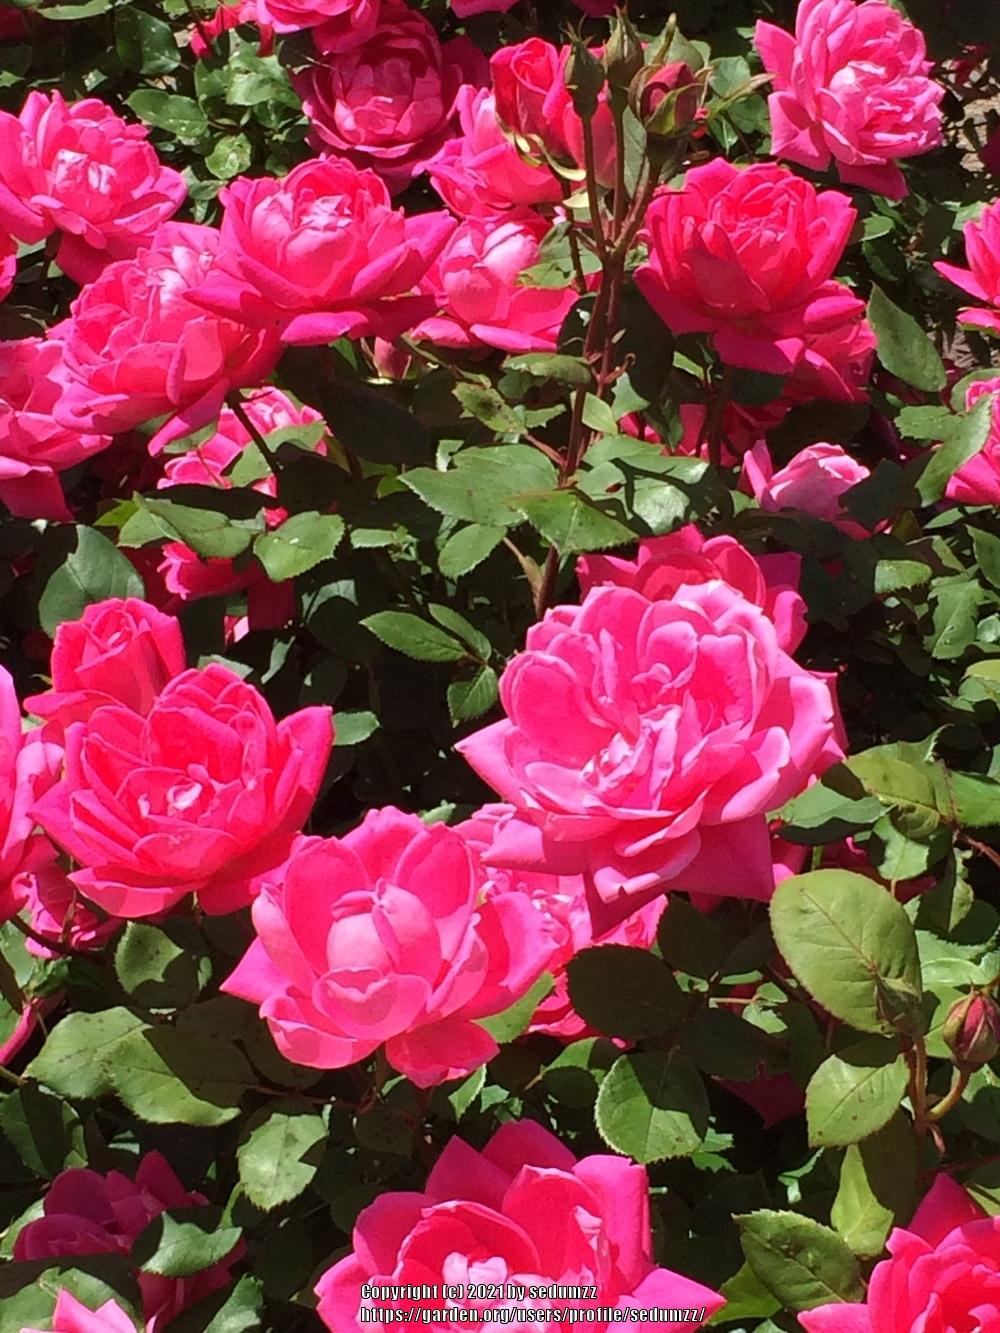 Photo of Roses (Rosa) uploaded by sedumzz